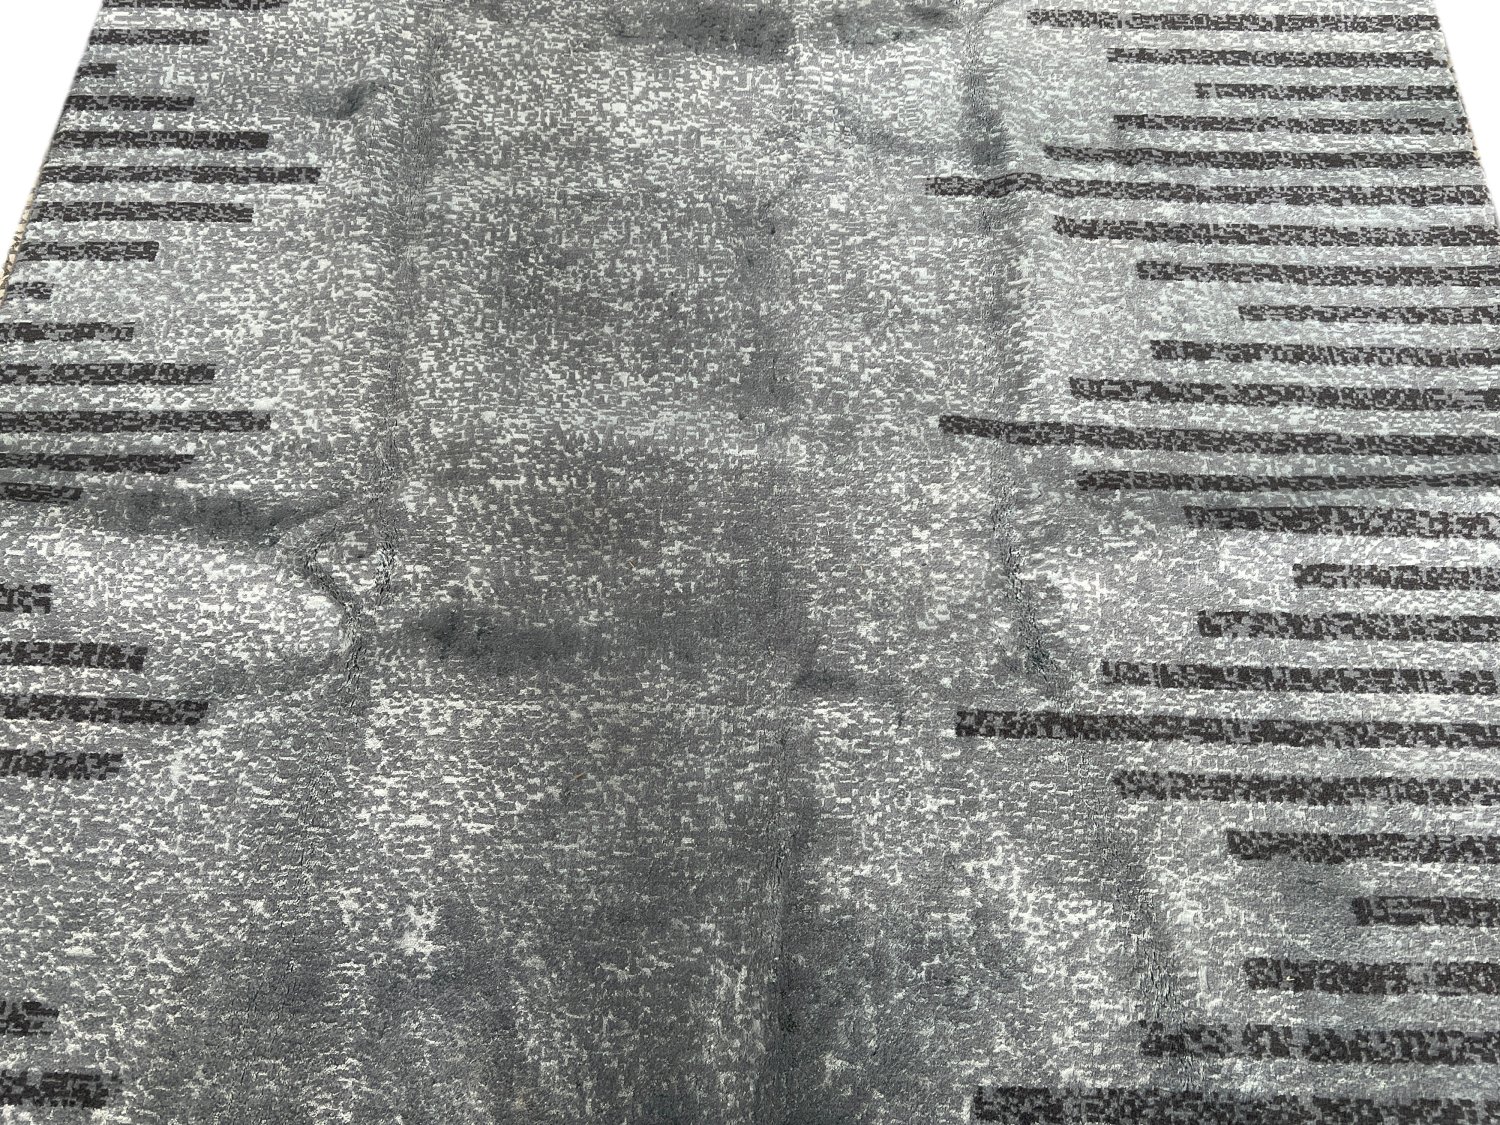 فرش پشمی ماشینی طبیعی و ارگانیک کد NM1 - زمینه آبی کم رنگ - حاشیه طوسی پر رنگ